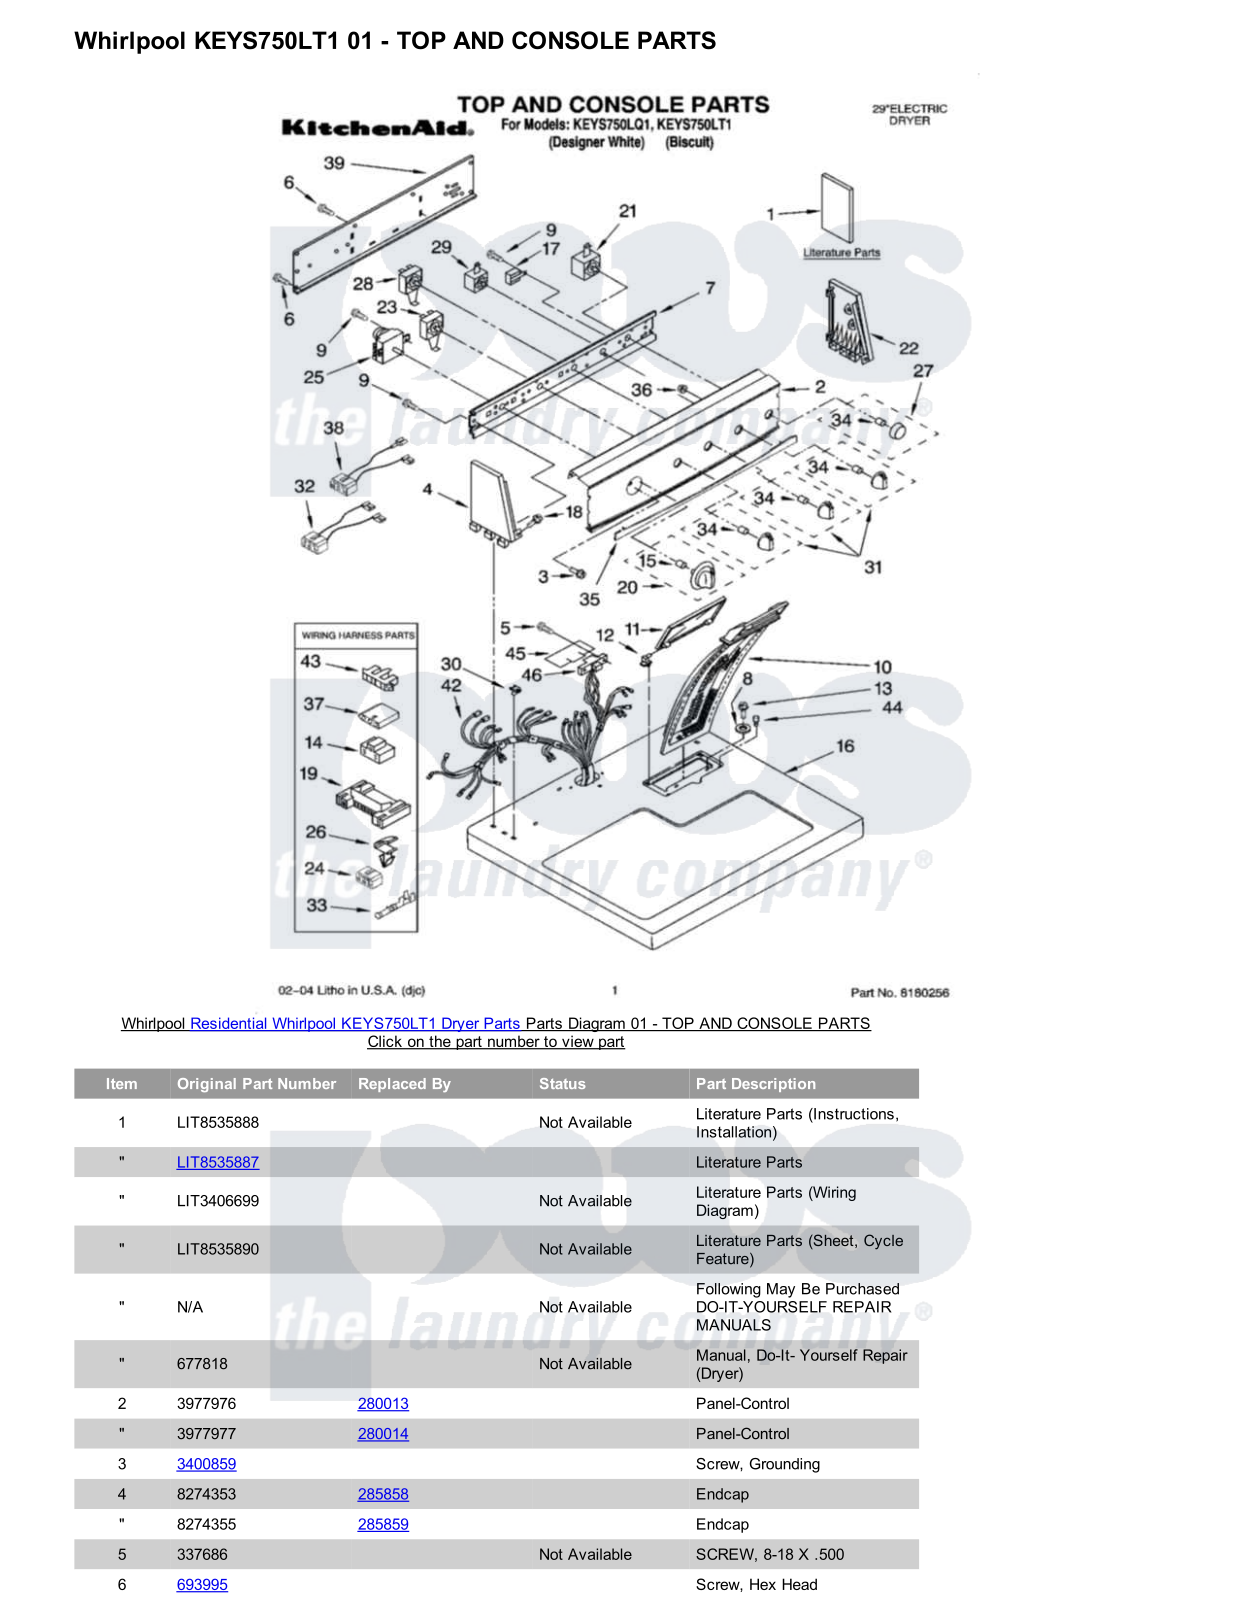 Whirlpool KEYS750LT1 Parts Diagram